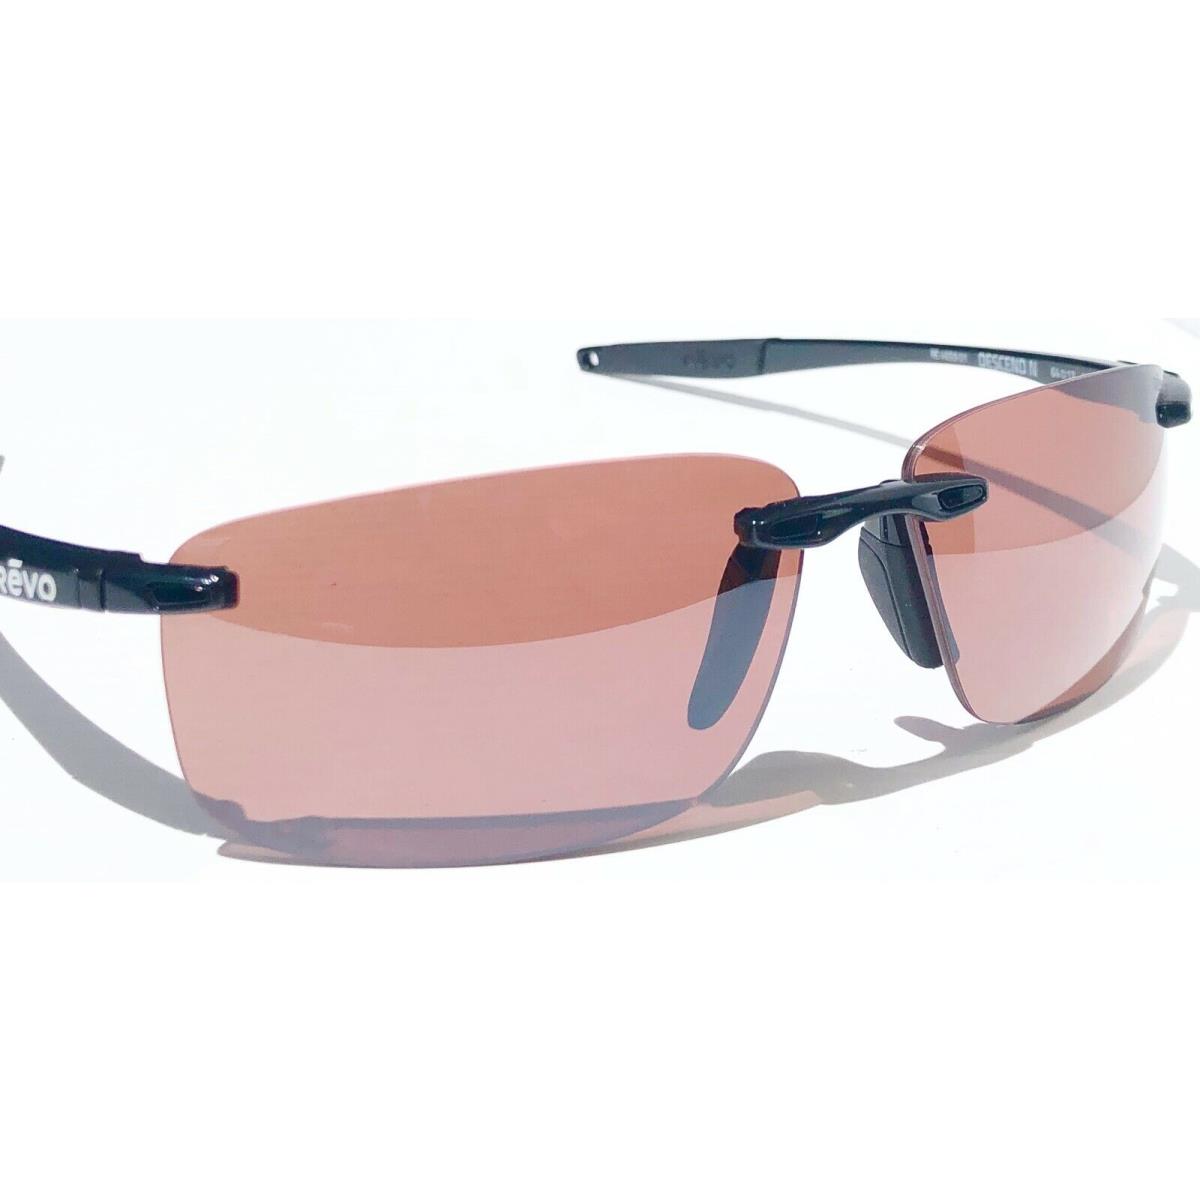 Revo sunglasses Descend - Black Frame, Brown Lens